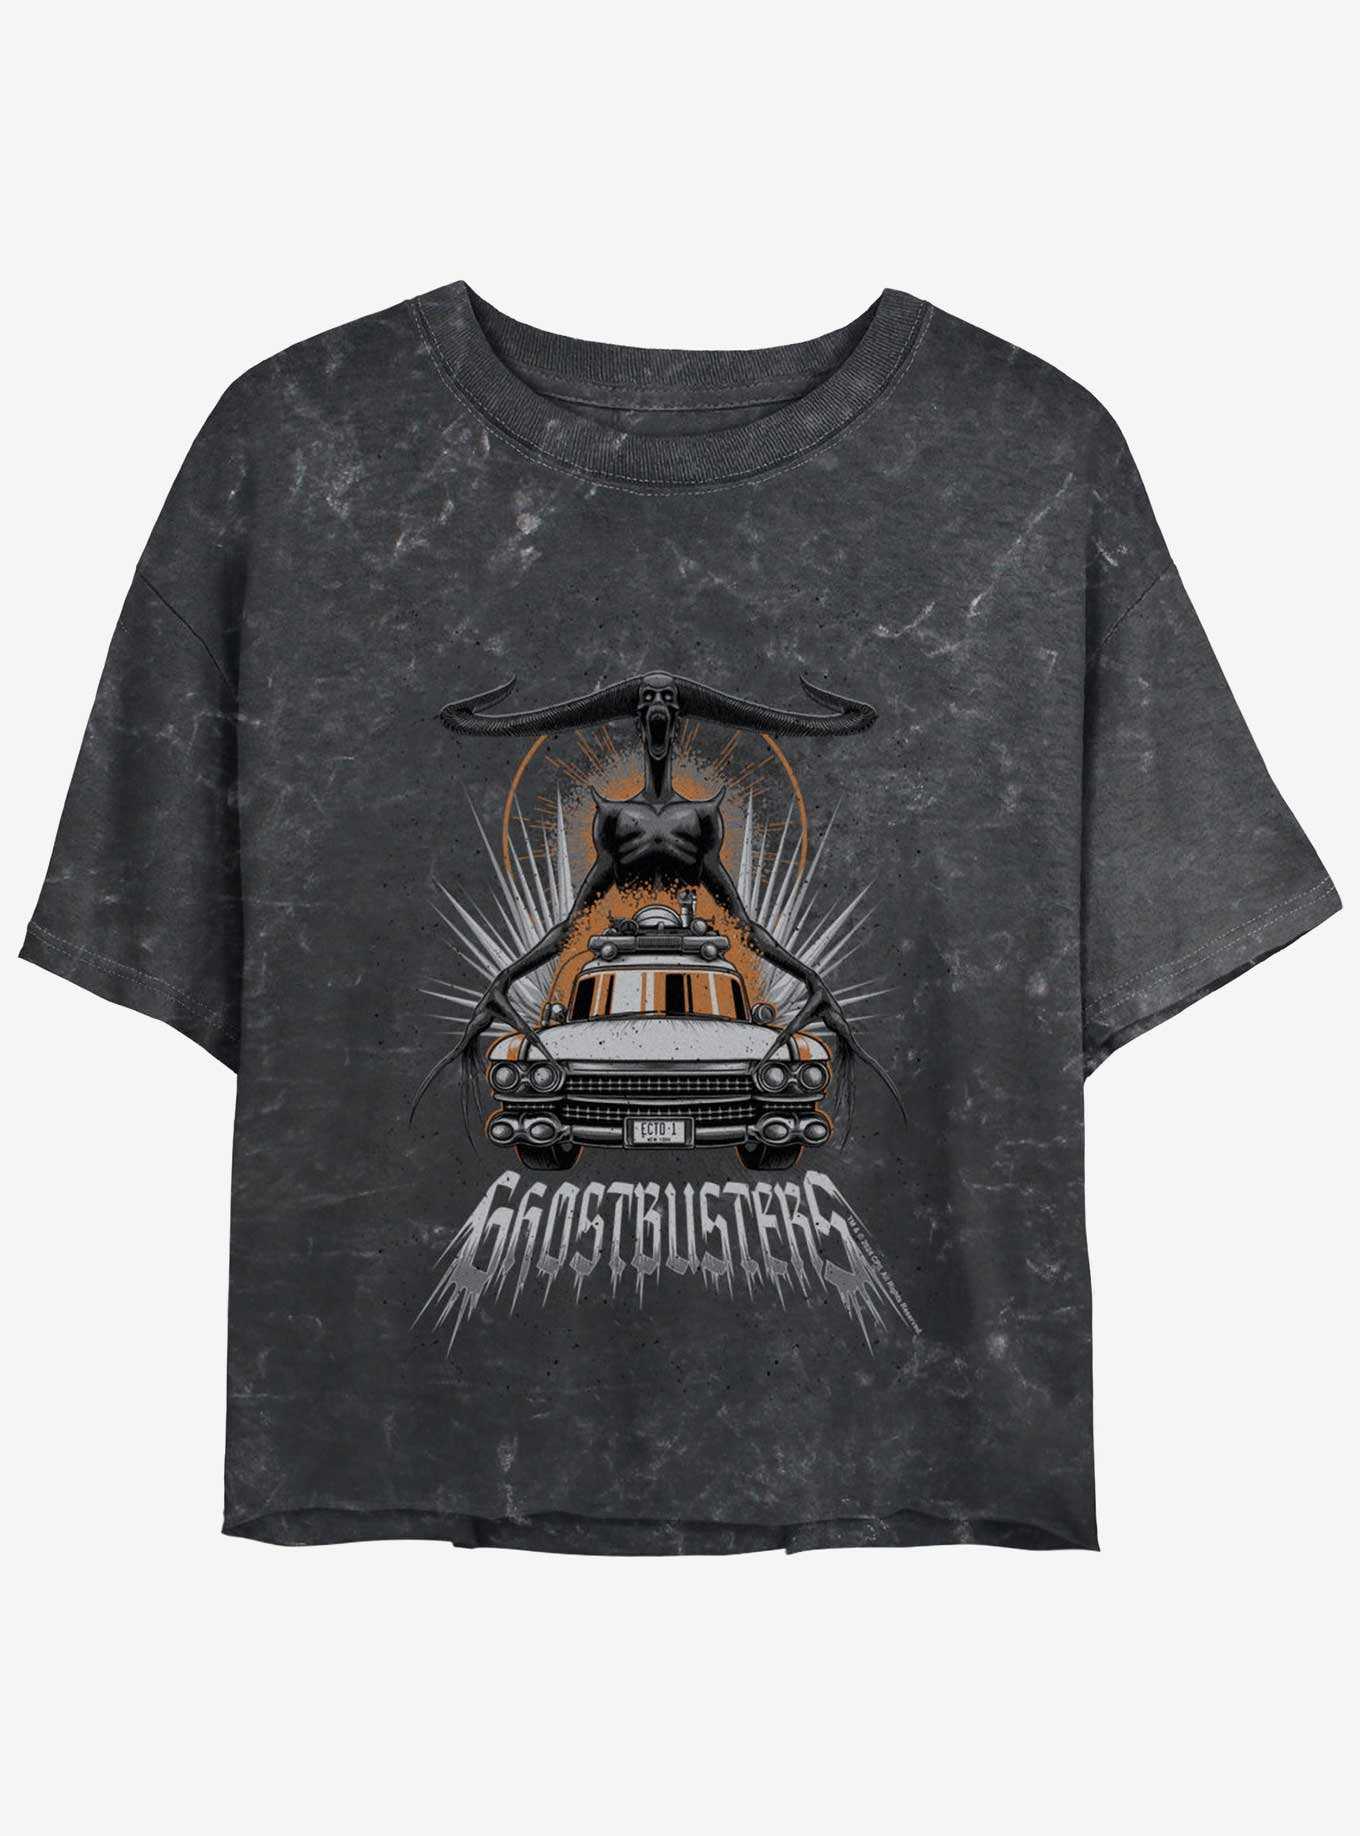 Ghostbusters Tall Dark and Horny at 12 o'clock Girls Mineral Wash Crop T-Shirt, , hi-res